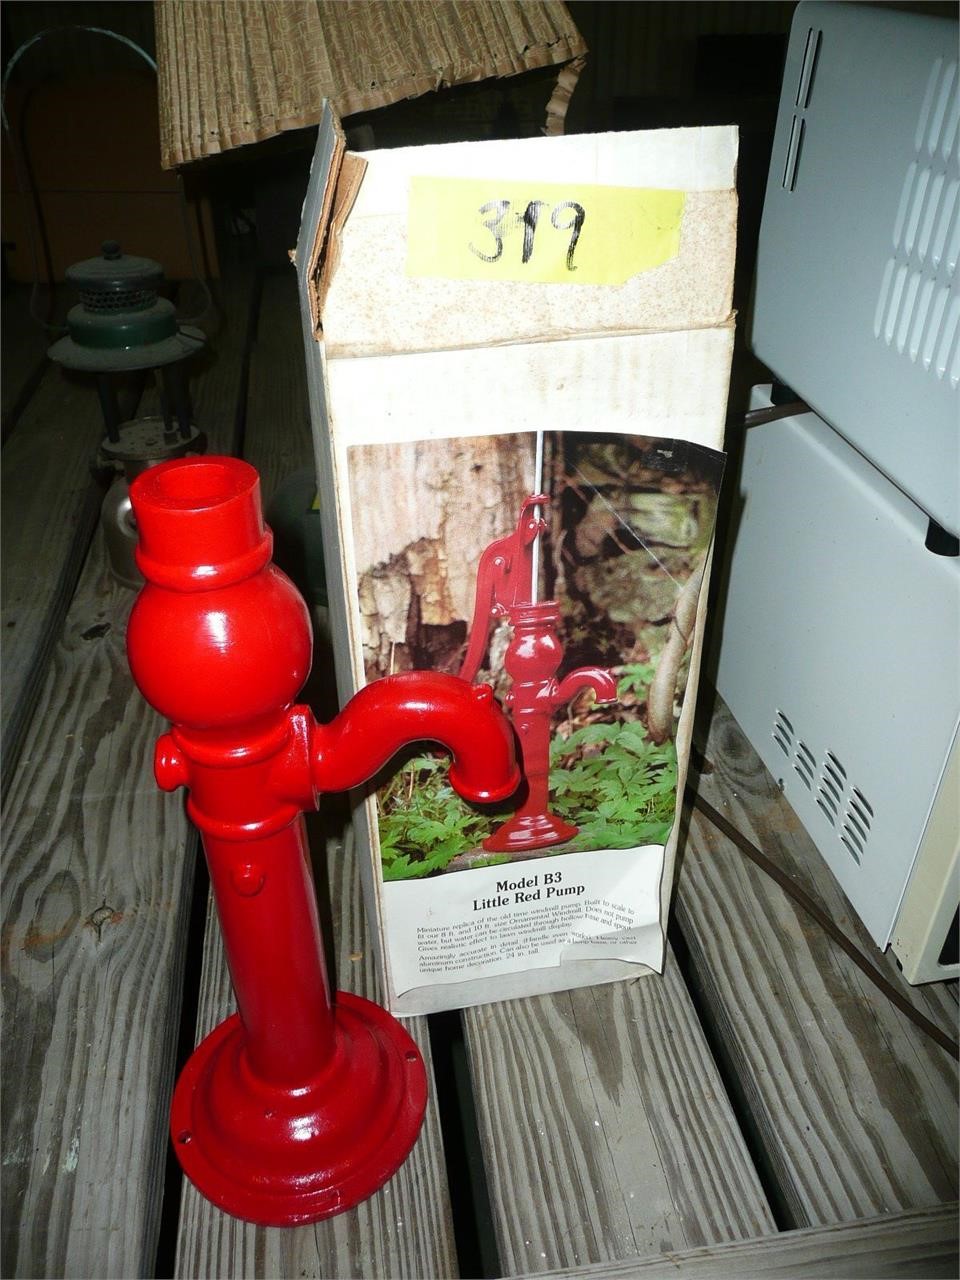 Model B3 Little Red Pump